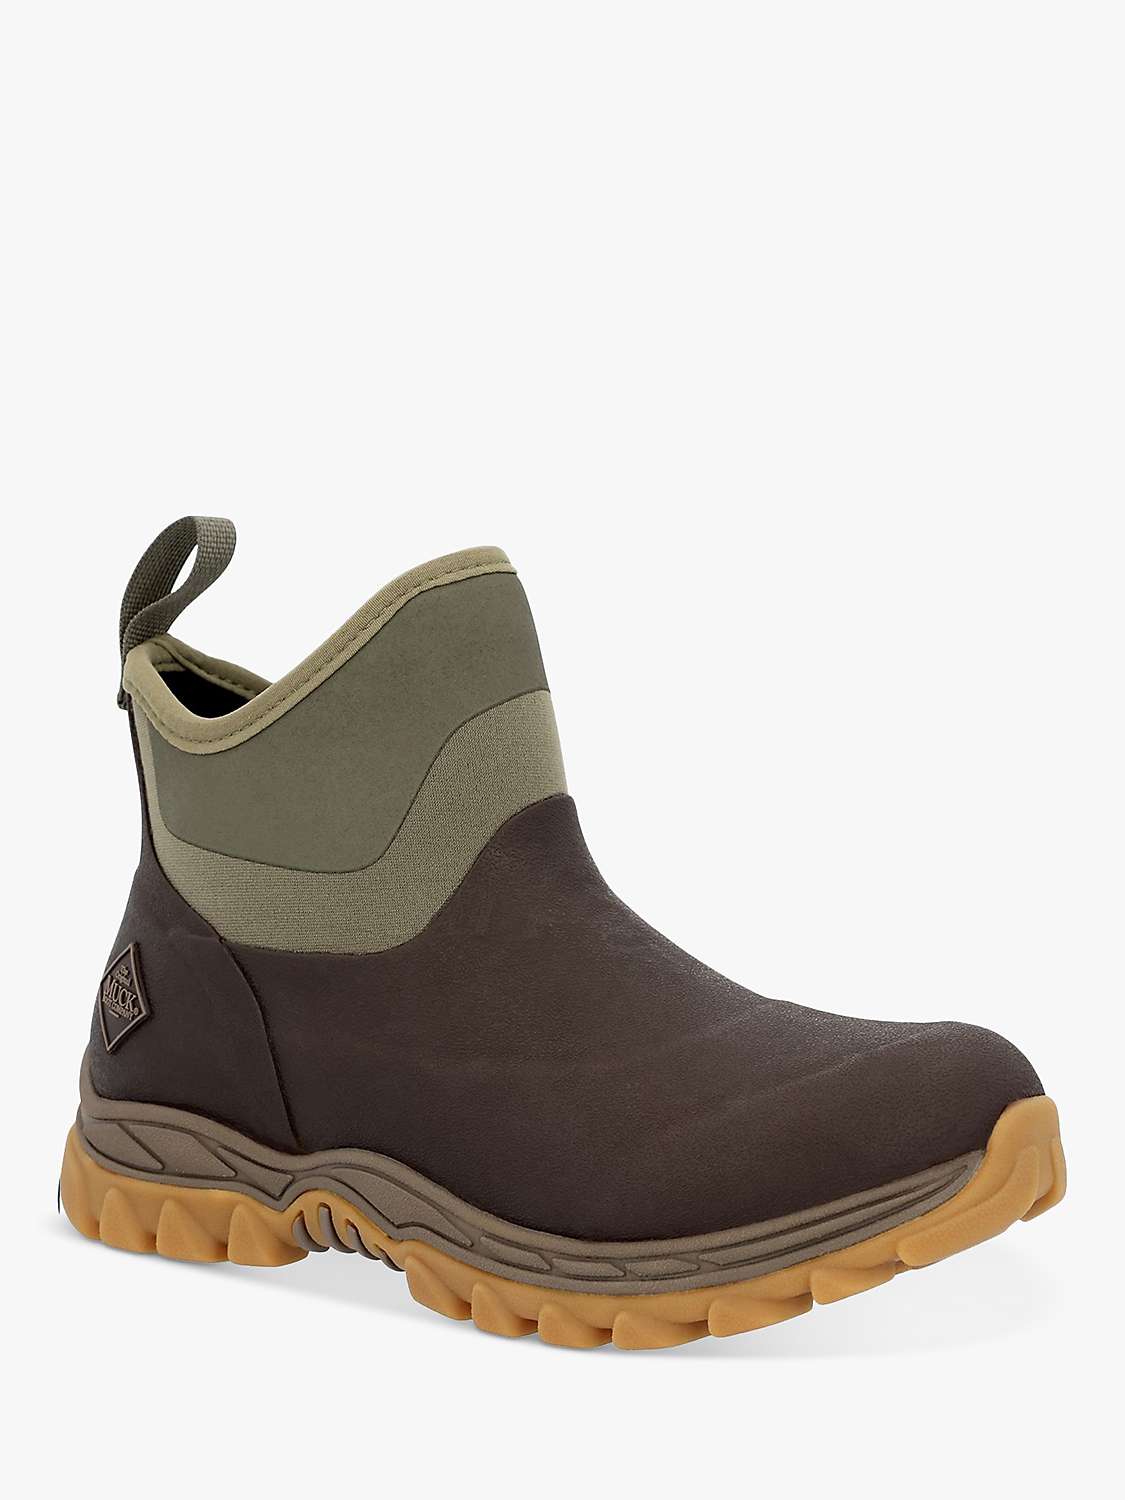 Buy Muck Arctic Sport II Ankle Boots, Dark Brown/Olive Online at johnlewis.com